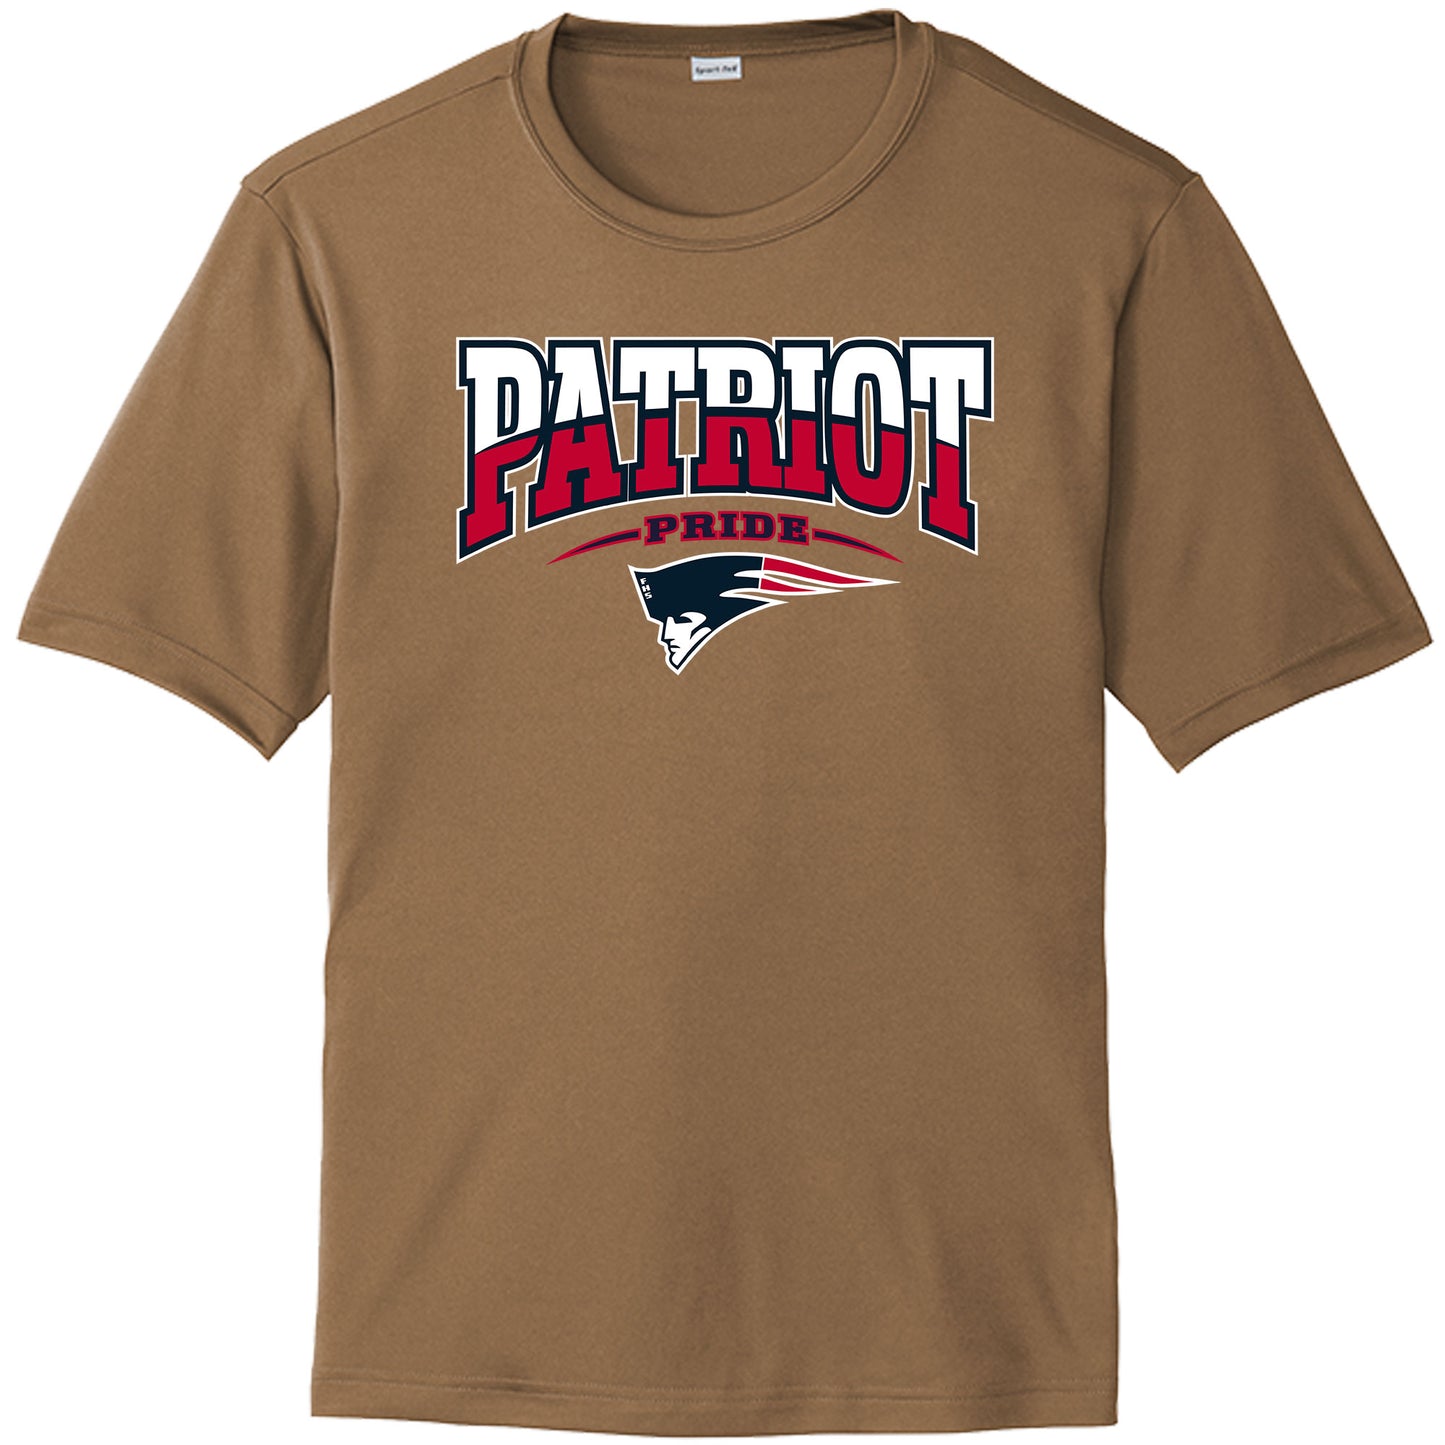 Freedom High School Drifit Shirt with Printed Patriots Logo